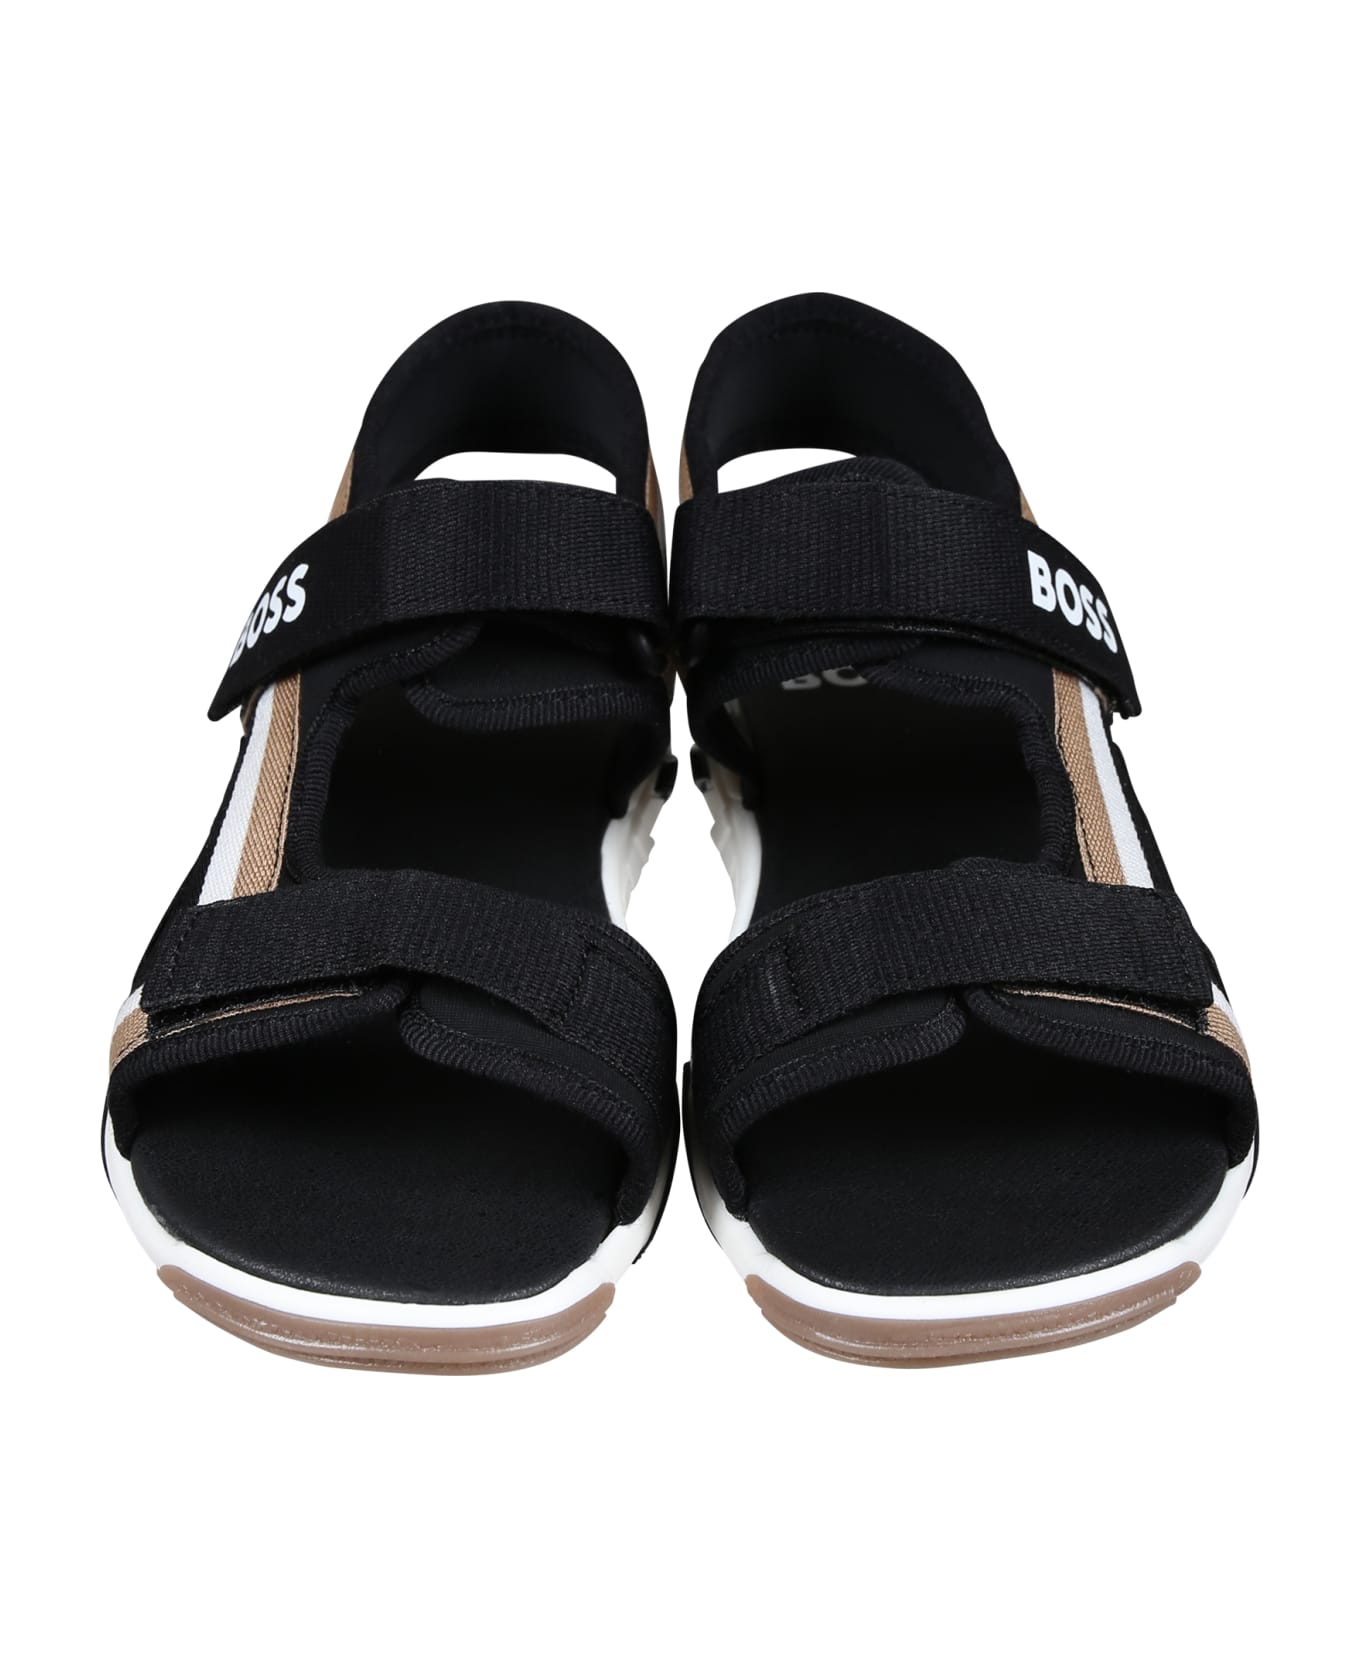 Hugo Boss Blaxk Sandals For Boy With Logo - Black シューズ